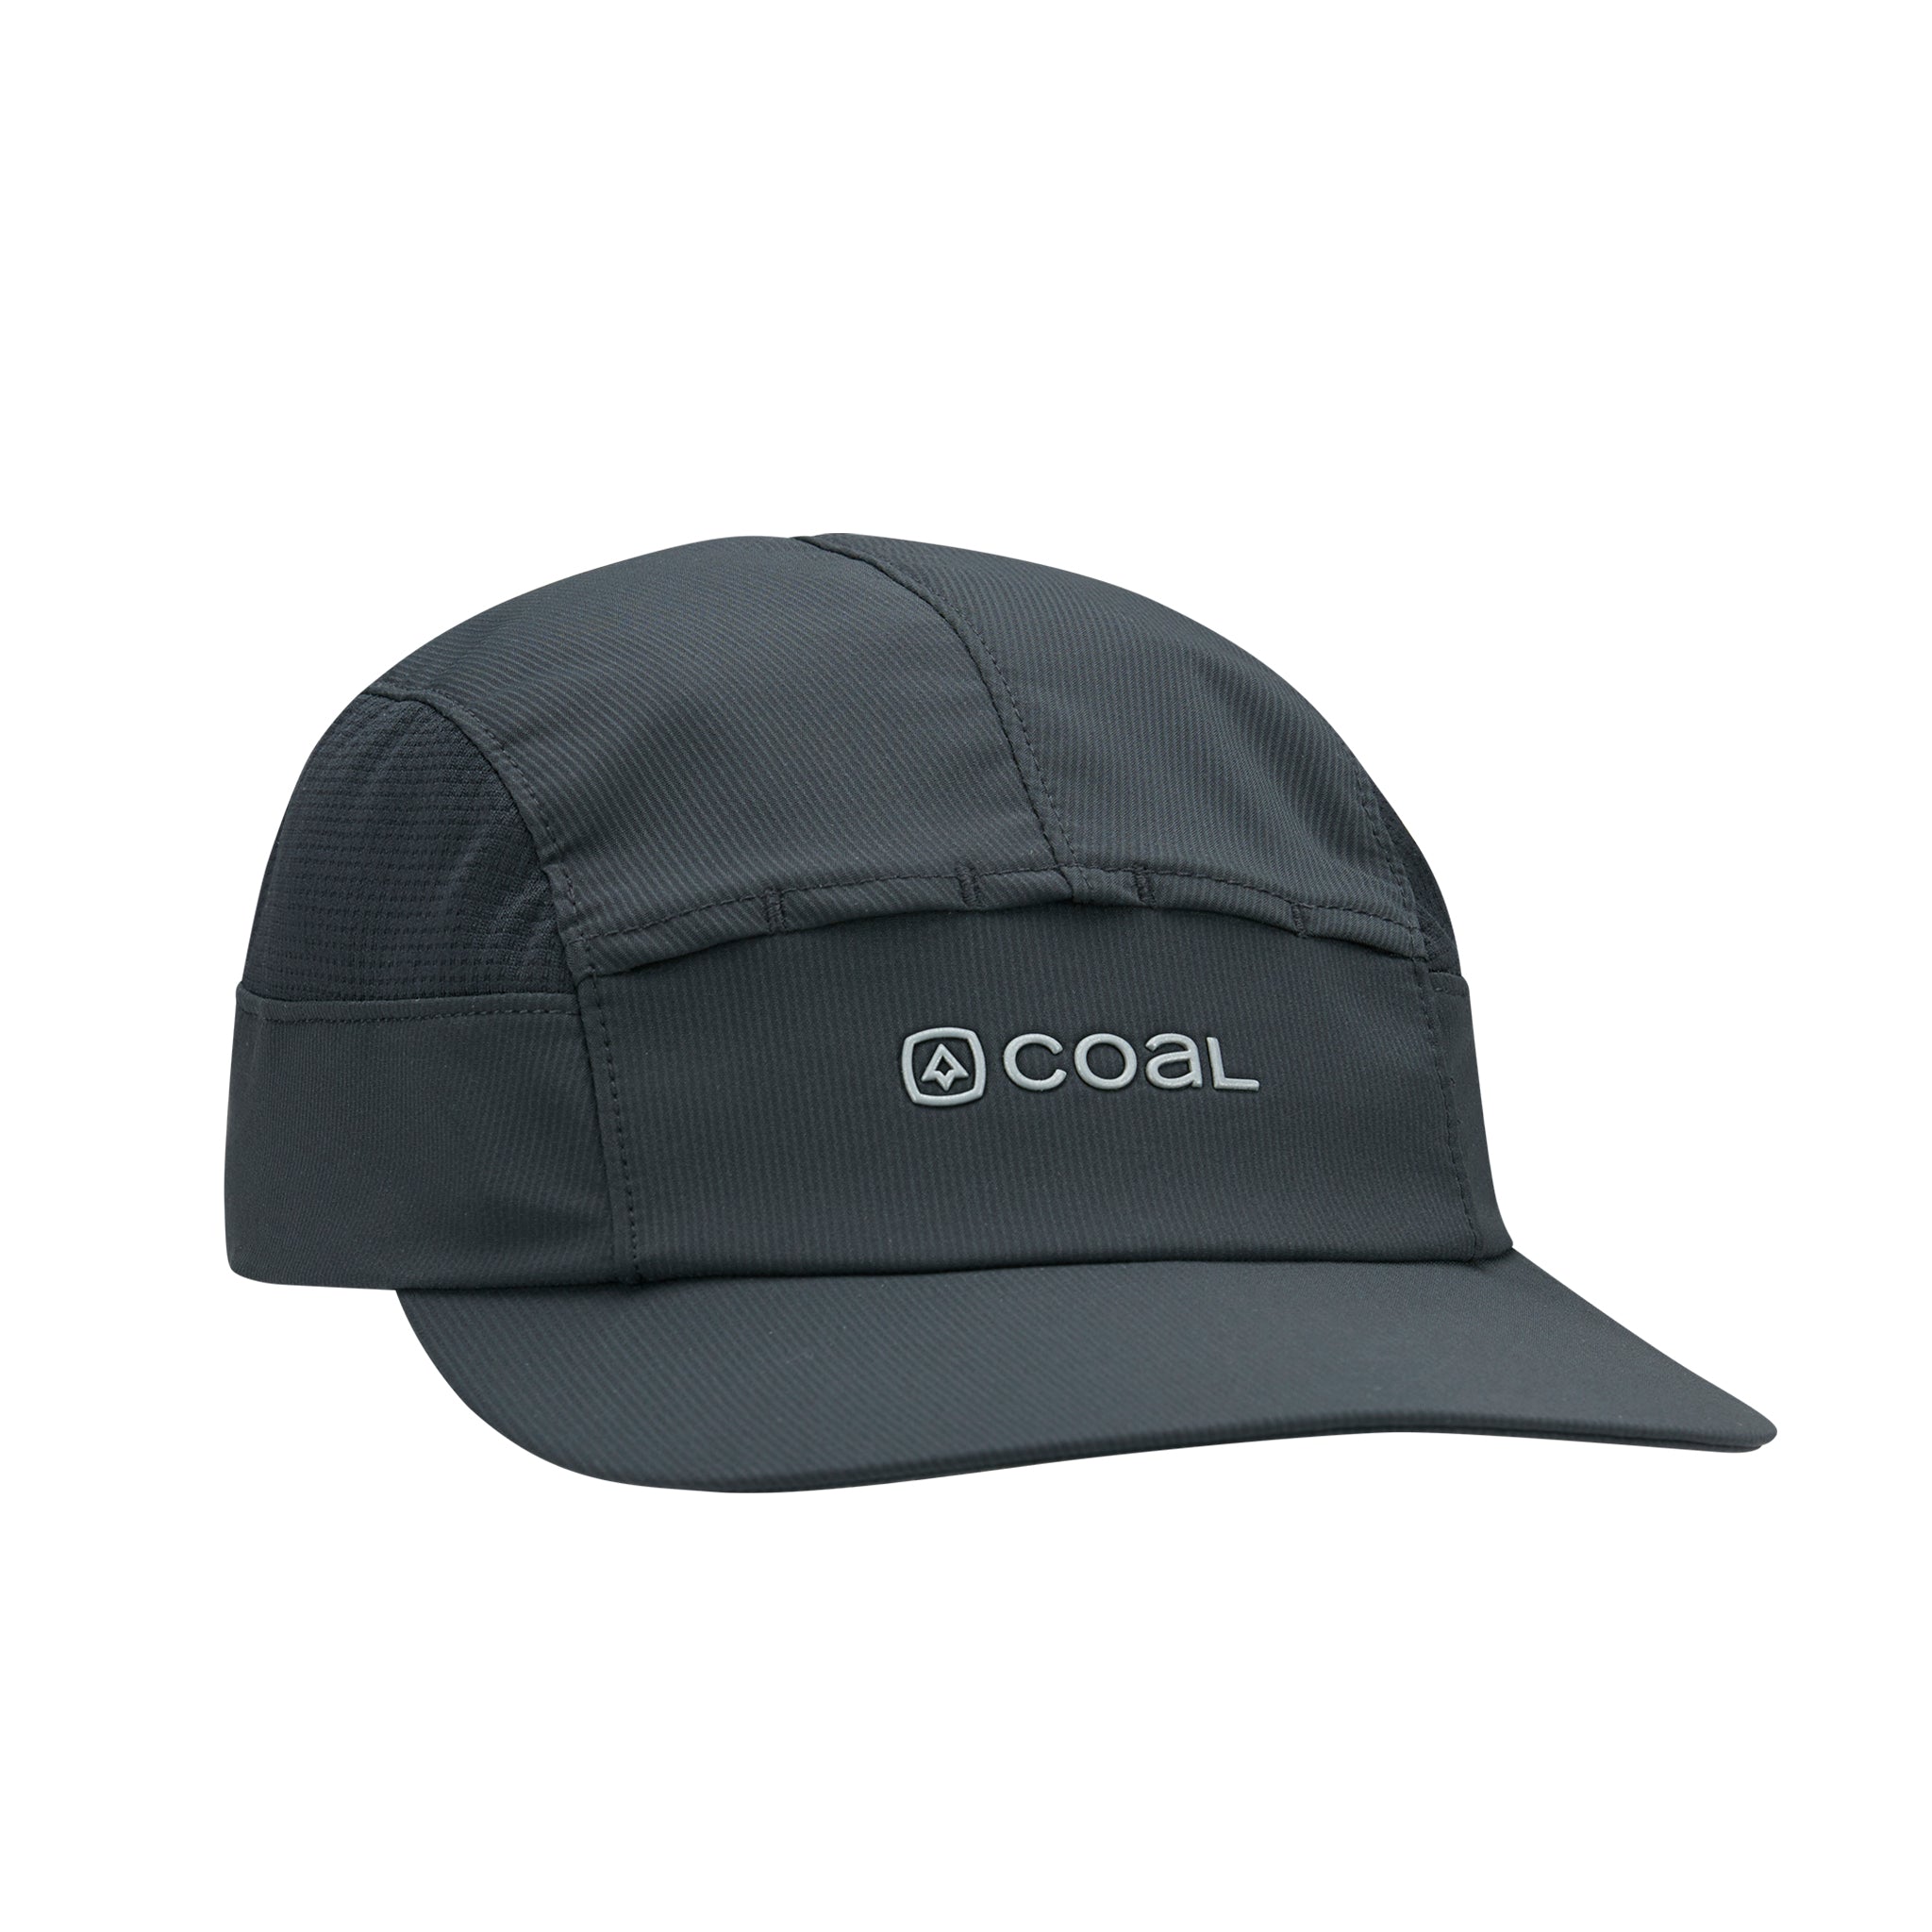 Coal Headwear The Deep River Cap